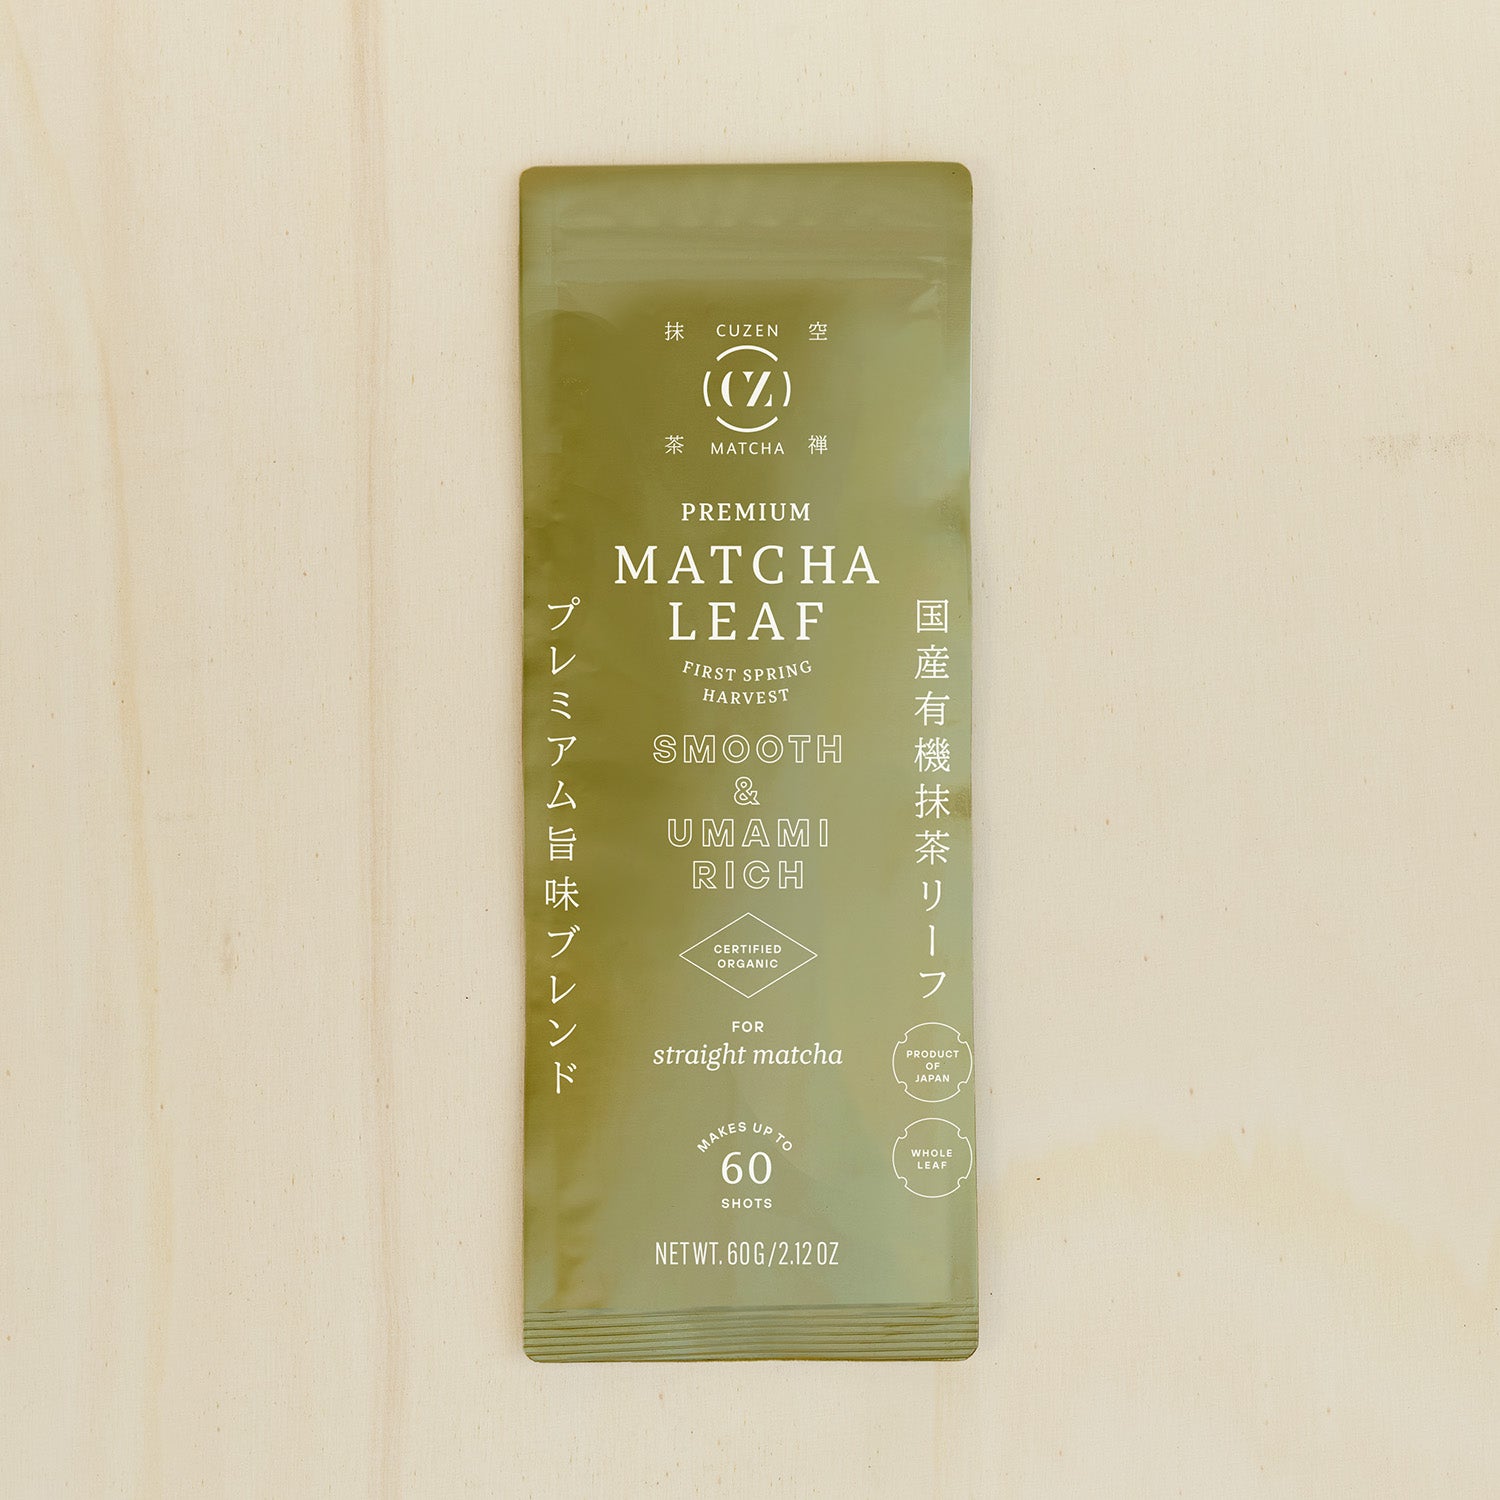 A gold-colored, 60-gram packet of Cuzen’s Premium Matcha Leaf.